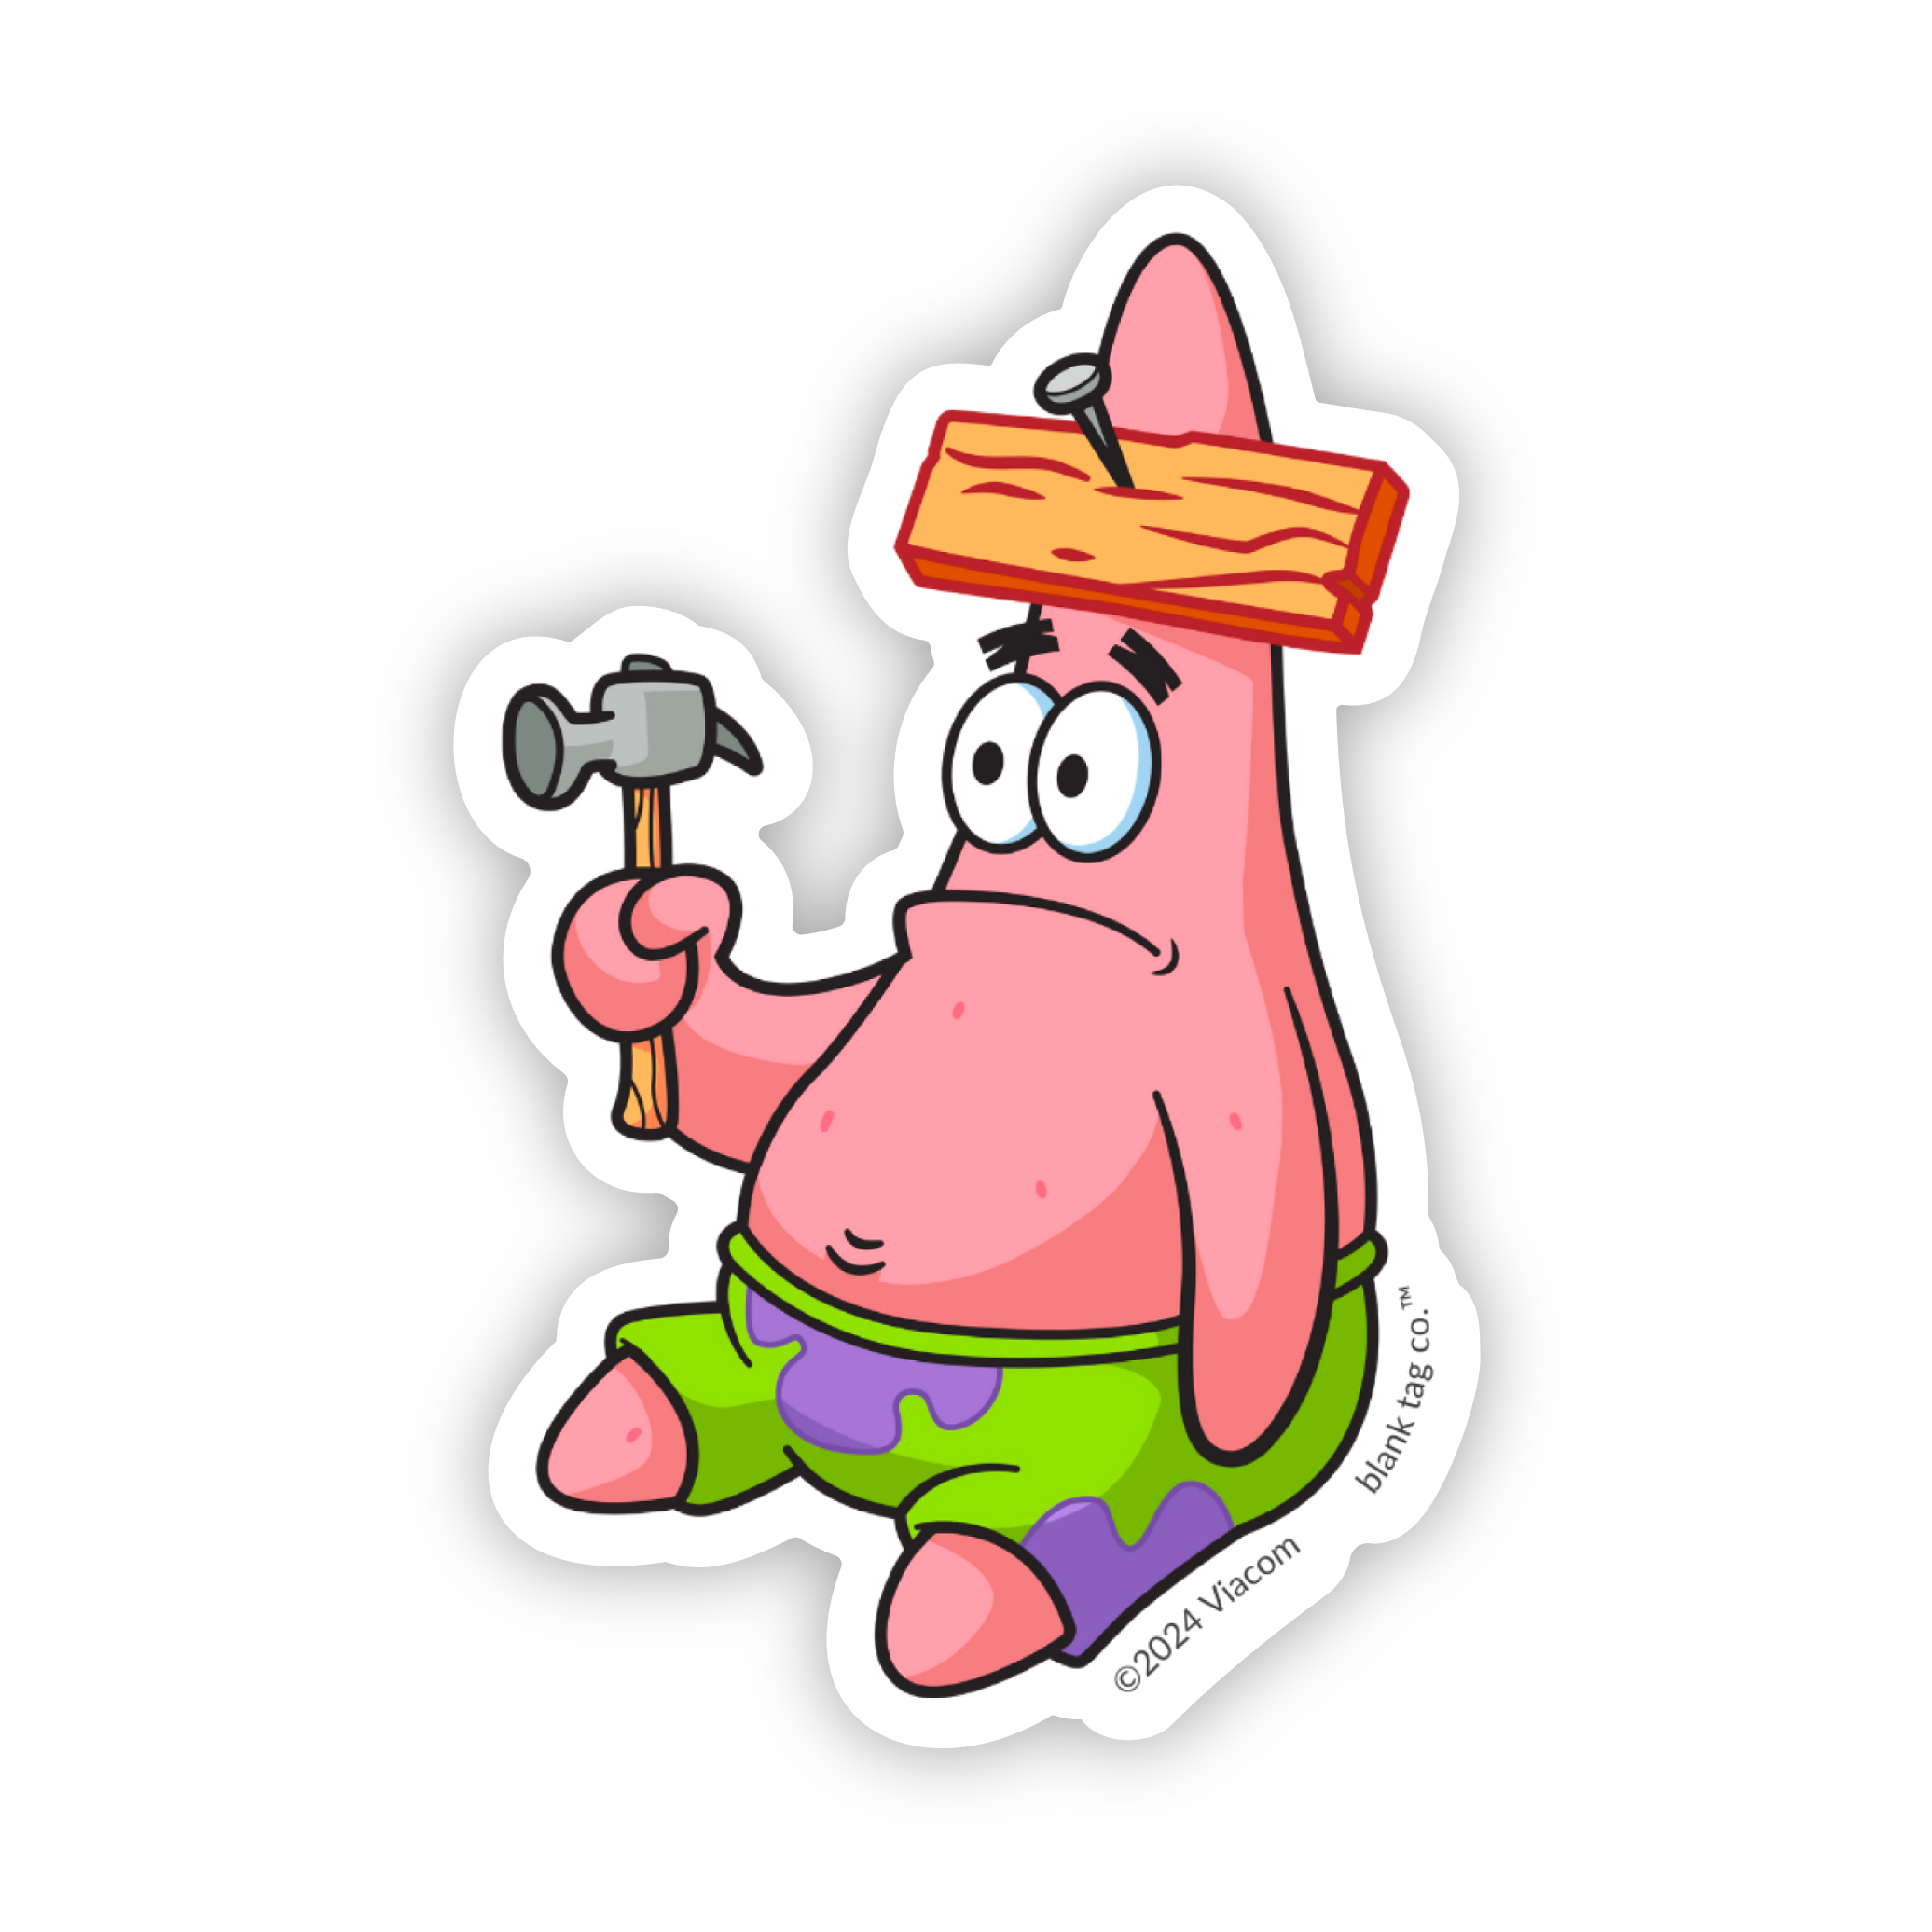 The Patrick Star Sticker